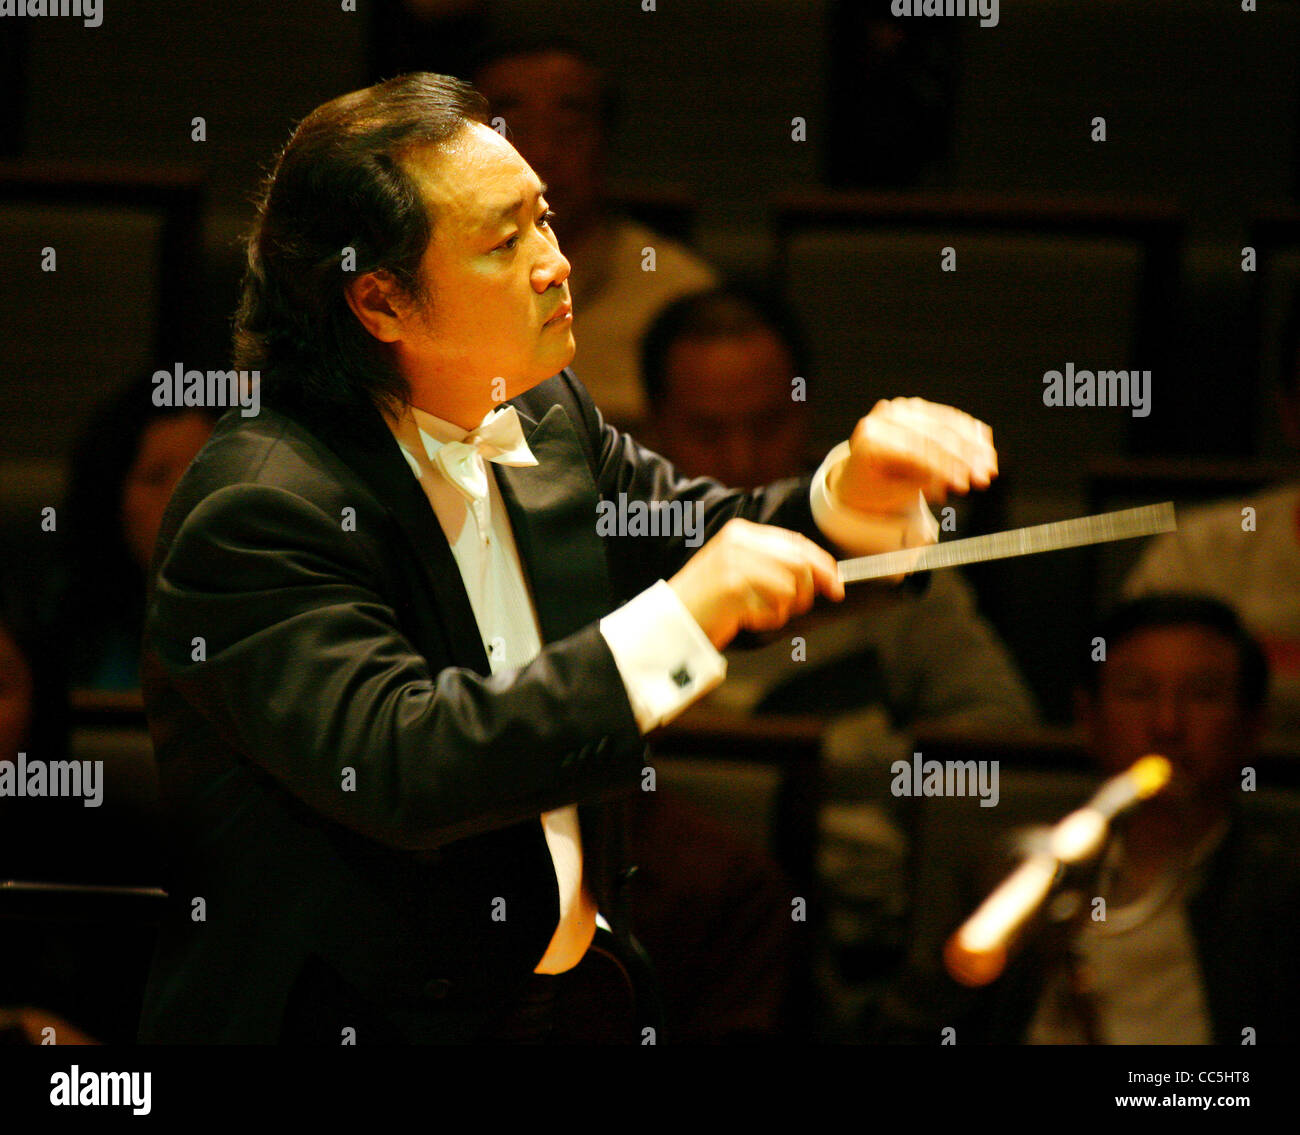 Man conducting an orchestra, Beijing, China Stock Photo